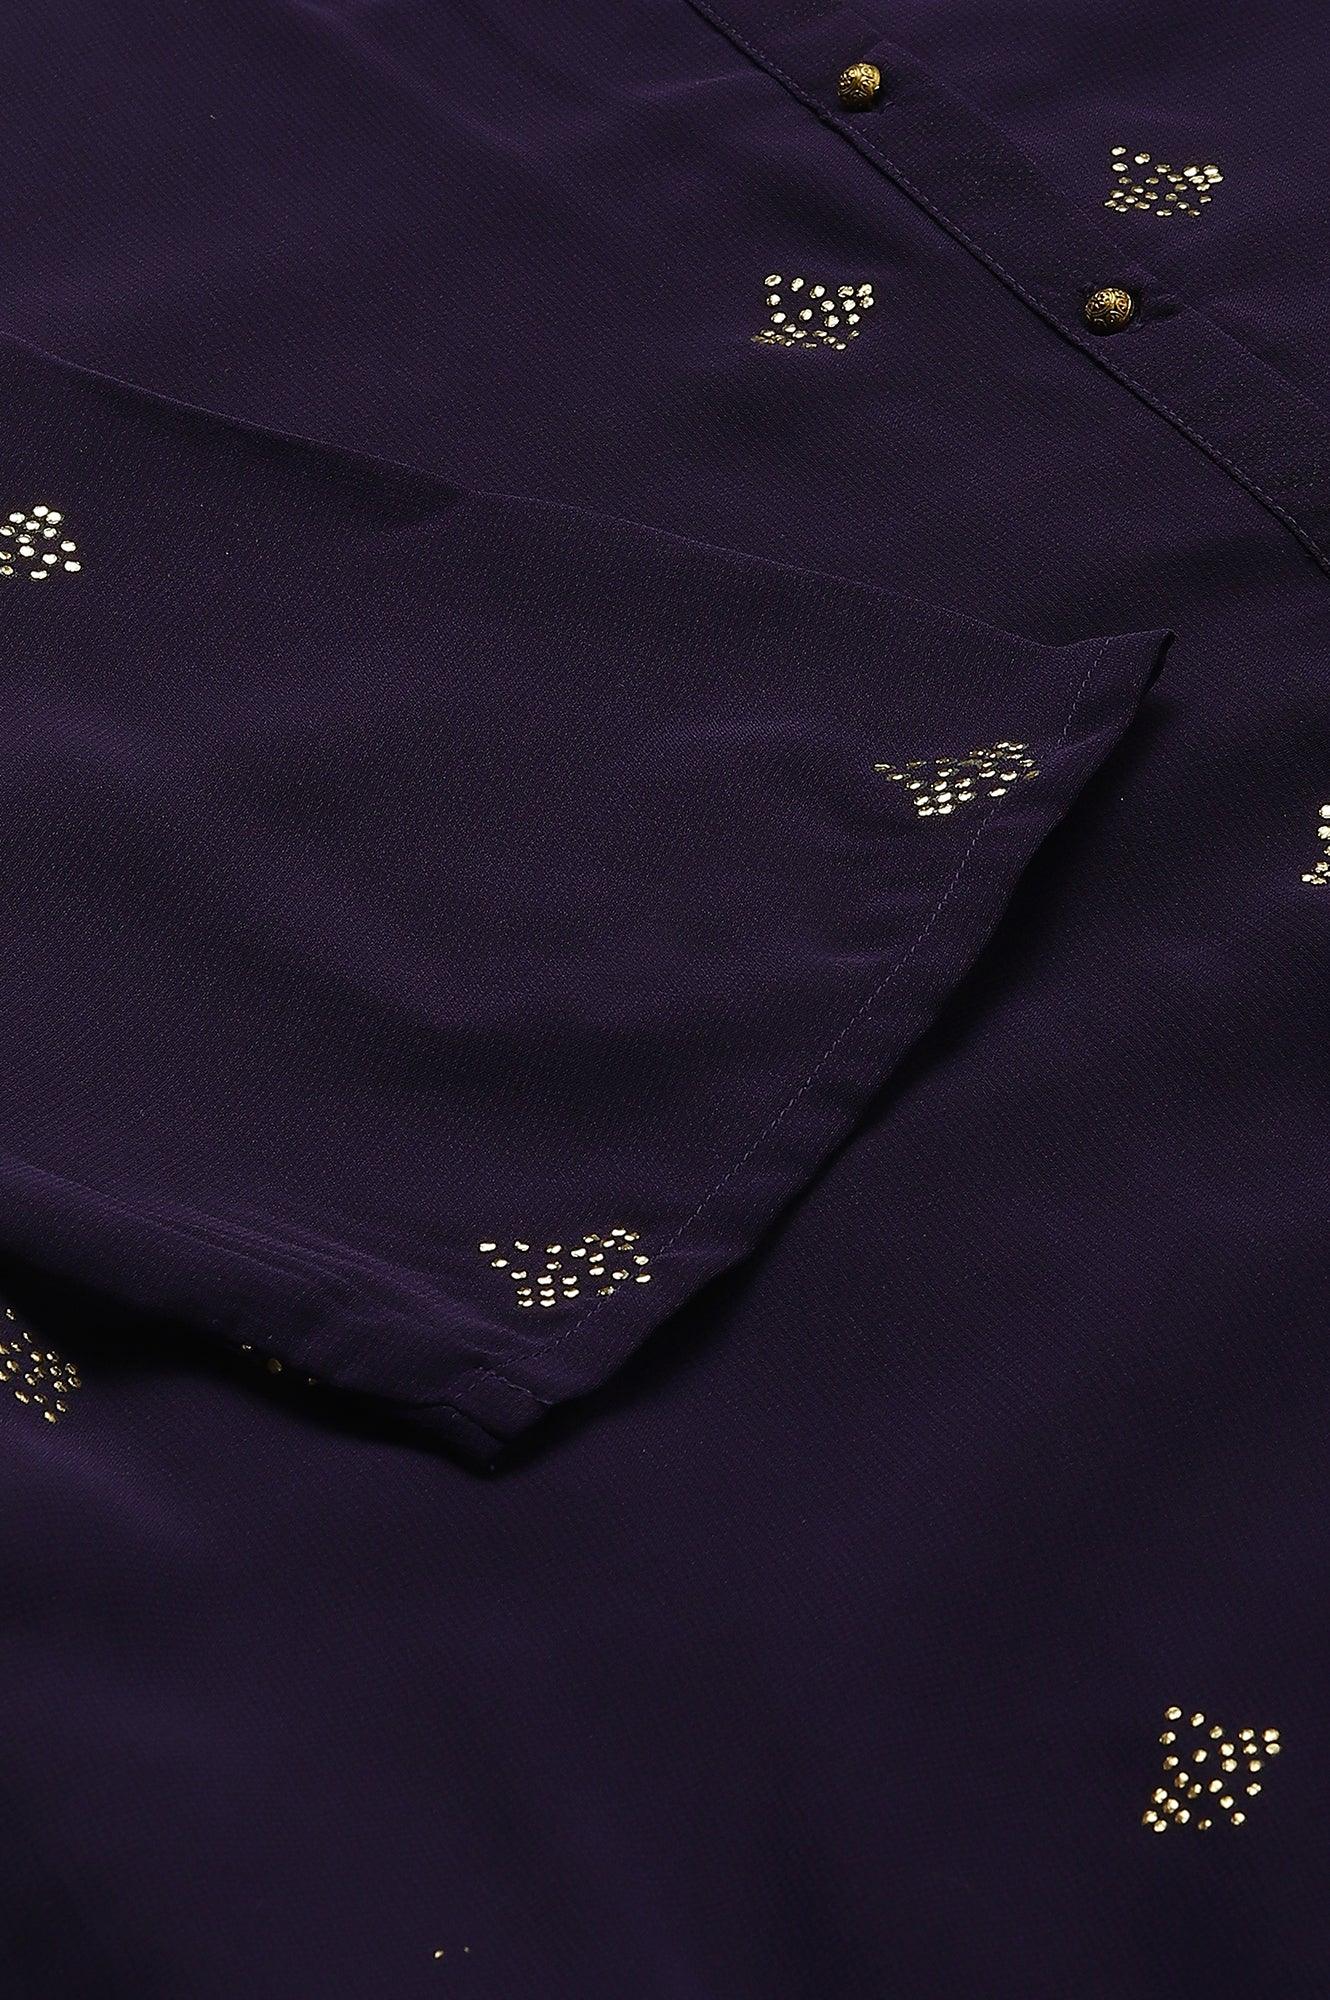 Plus Size Grape Purple Cowled Hemline kurta With Tights - wforwoman